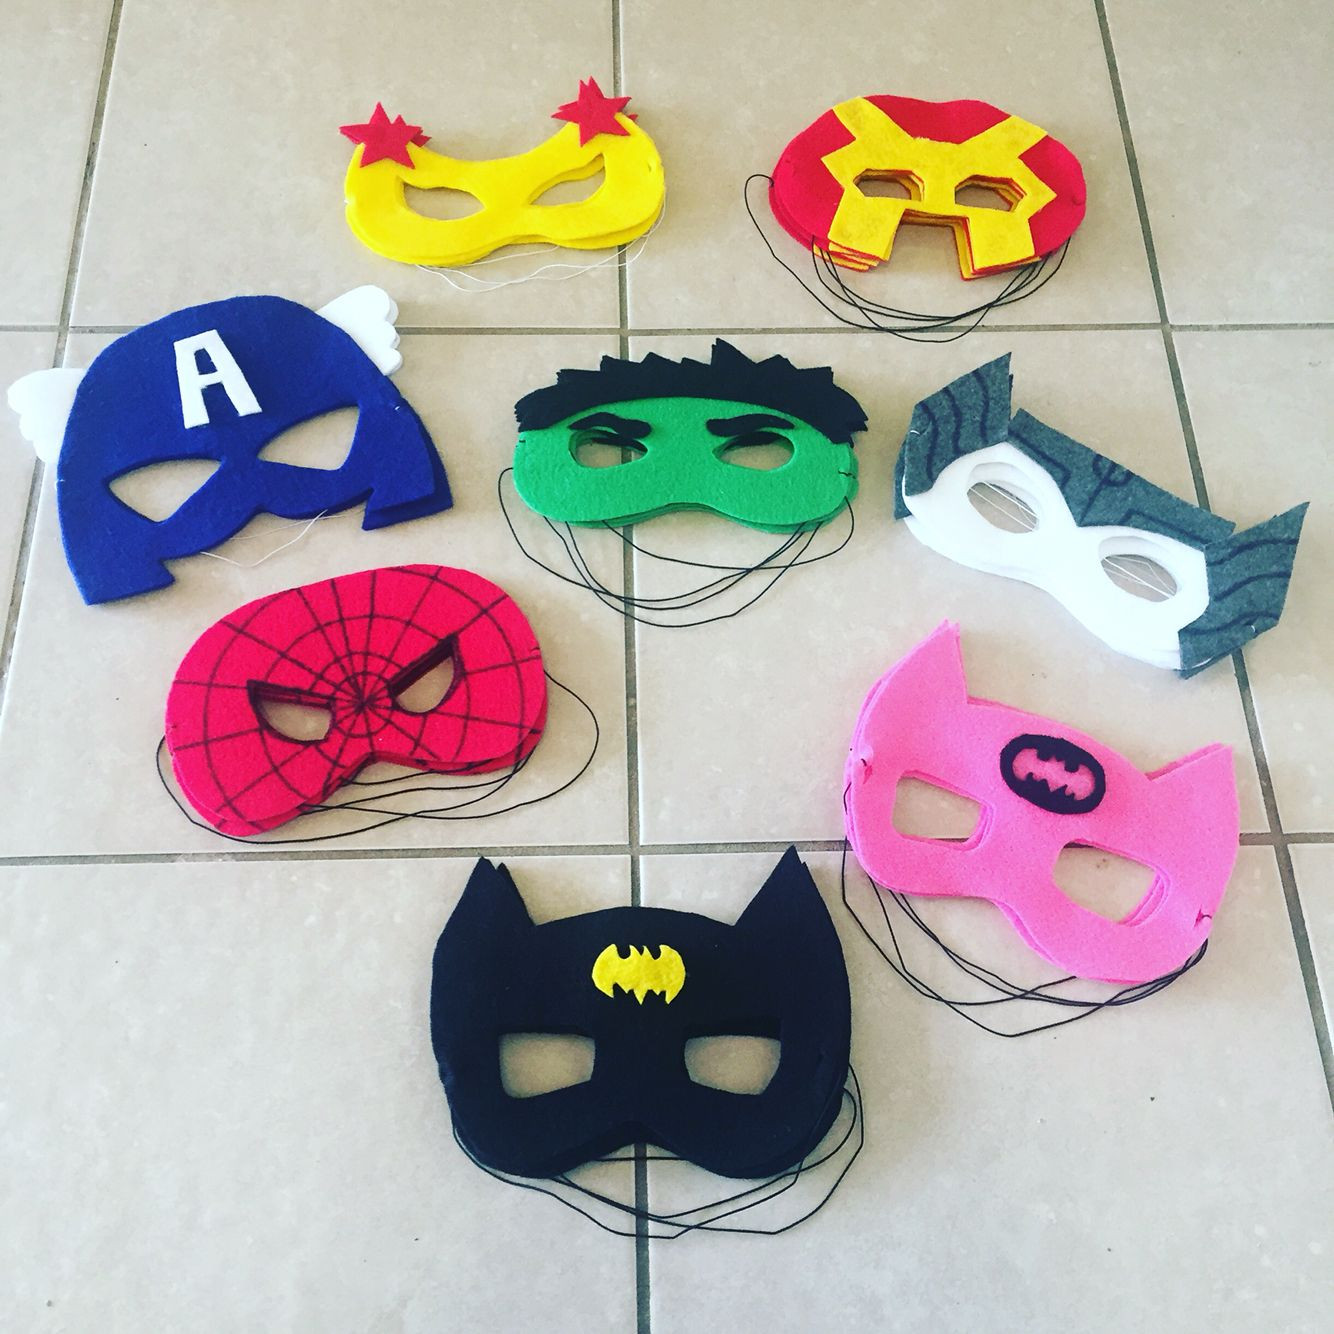 Best ideas about DIY Superhero Masks
. Save or Pin Avengers superhero DIY felt masks Now.